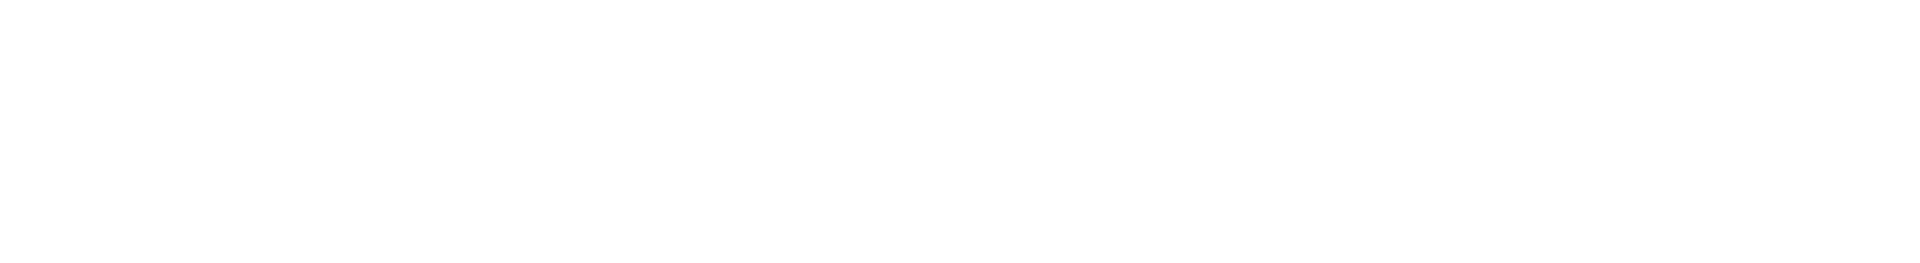 Chubby Diaries Logo